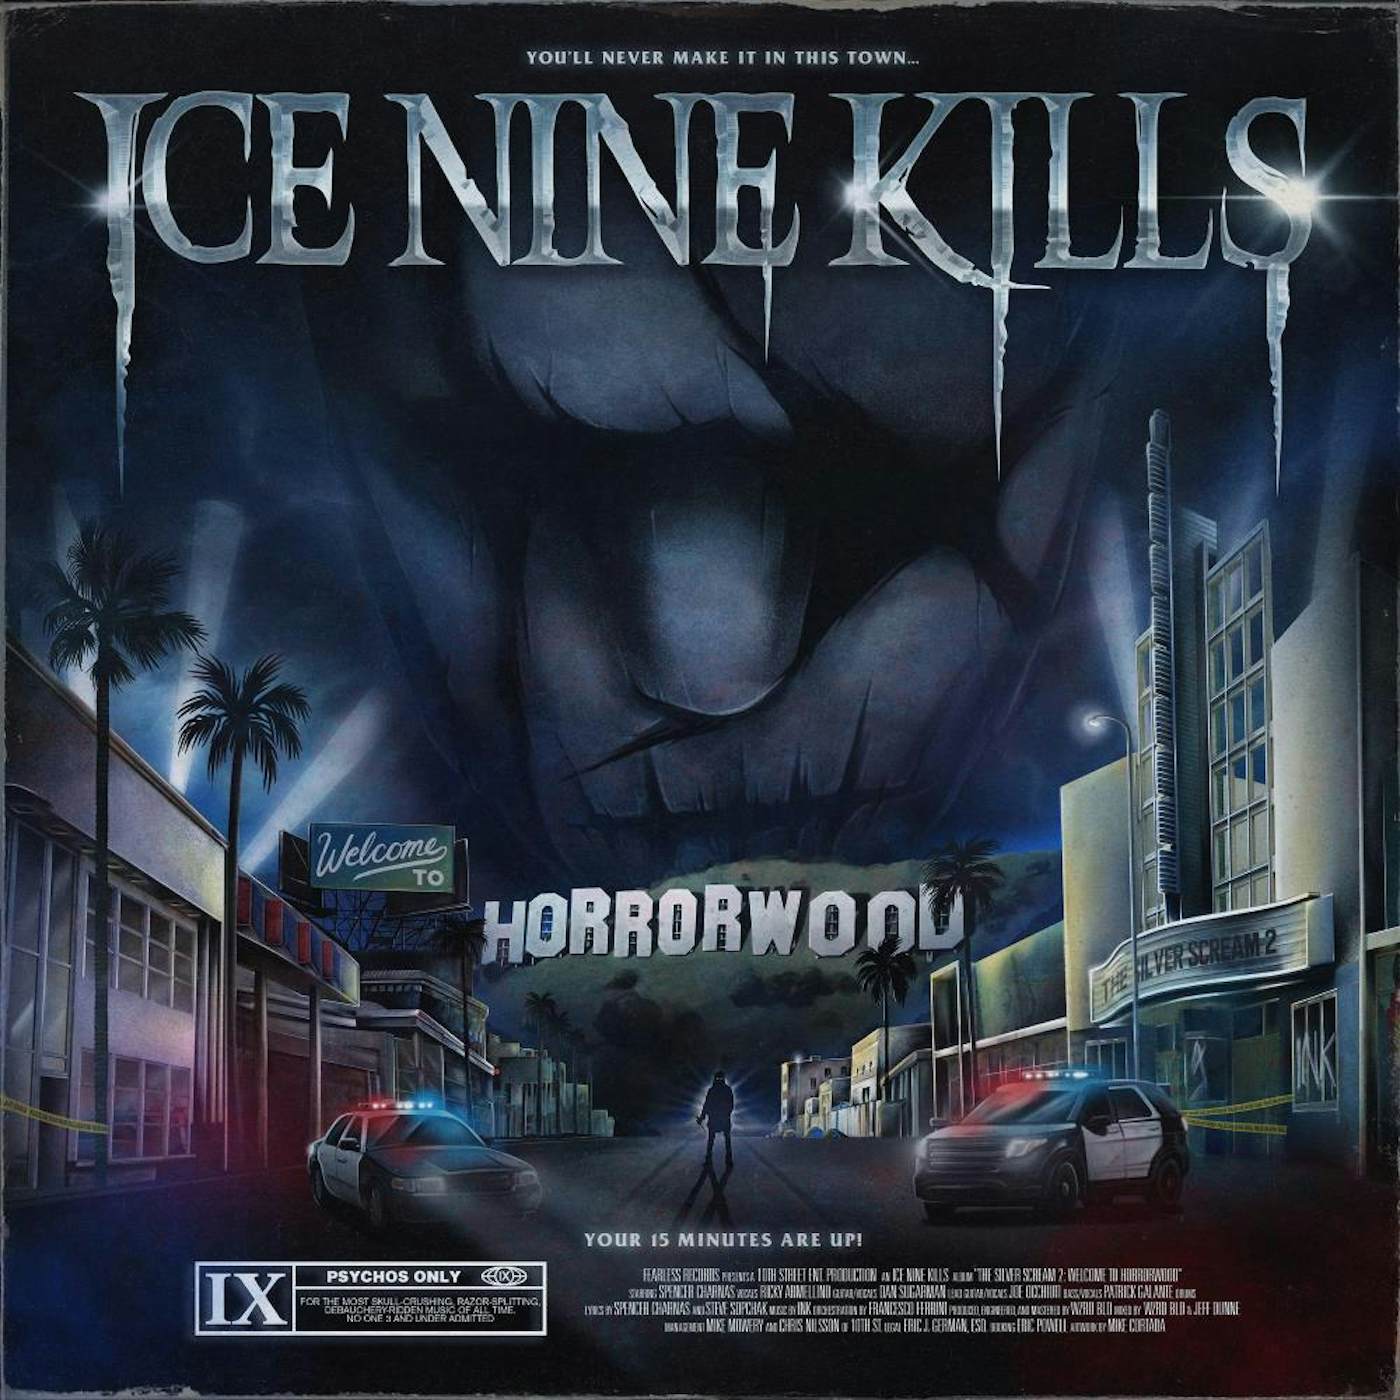 Ice Nine Kills WELCOME TO HORRORWOOD: THE SILVER SCREAM 2 CD